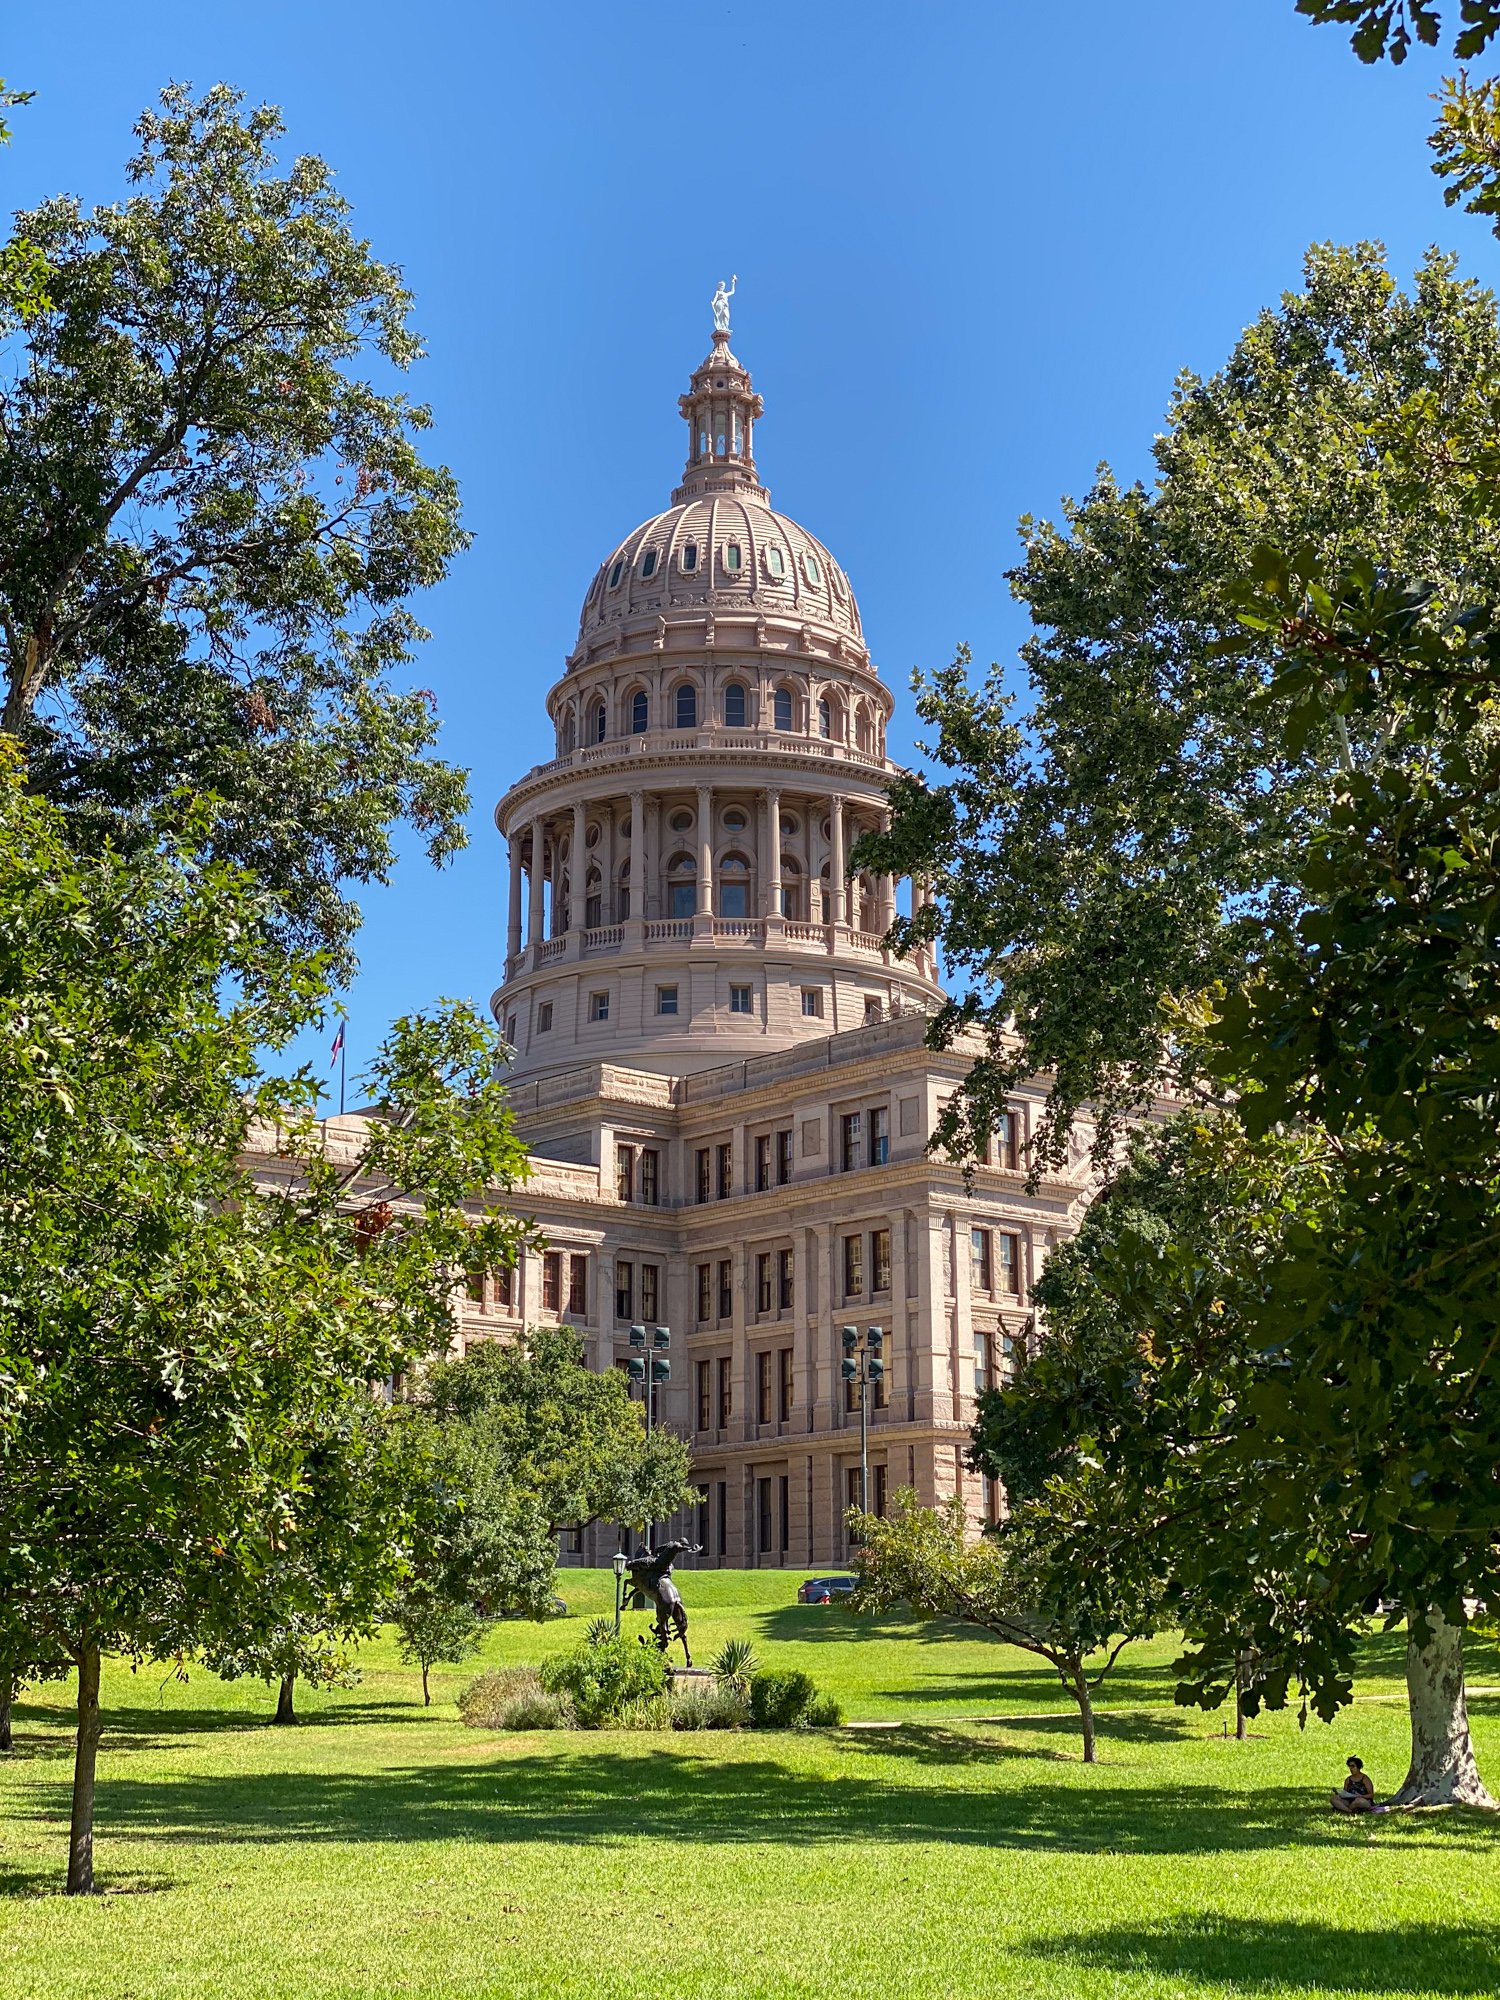 Texas Capitol Building in Austin